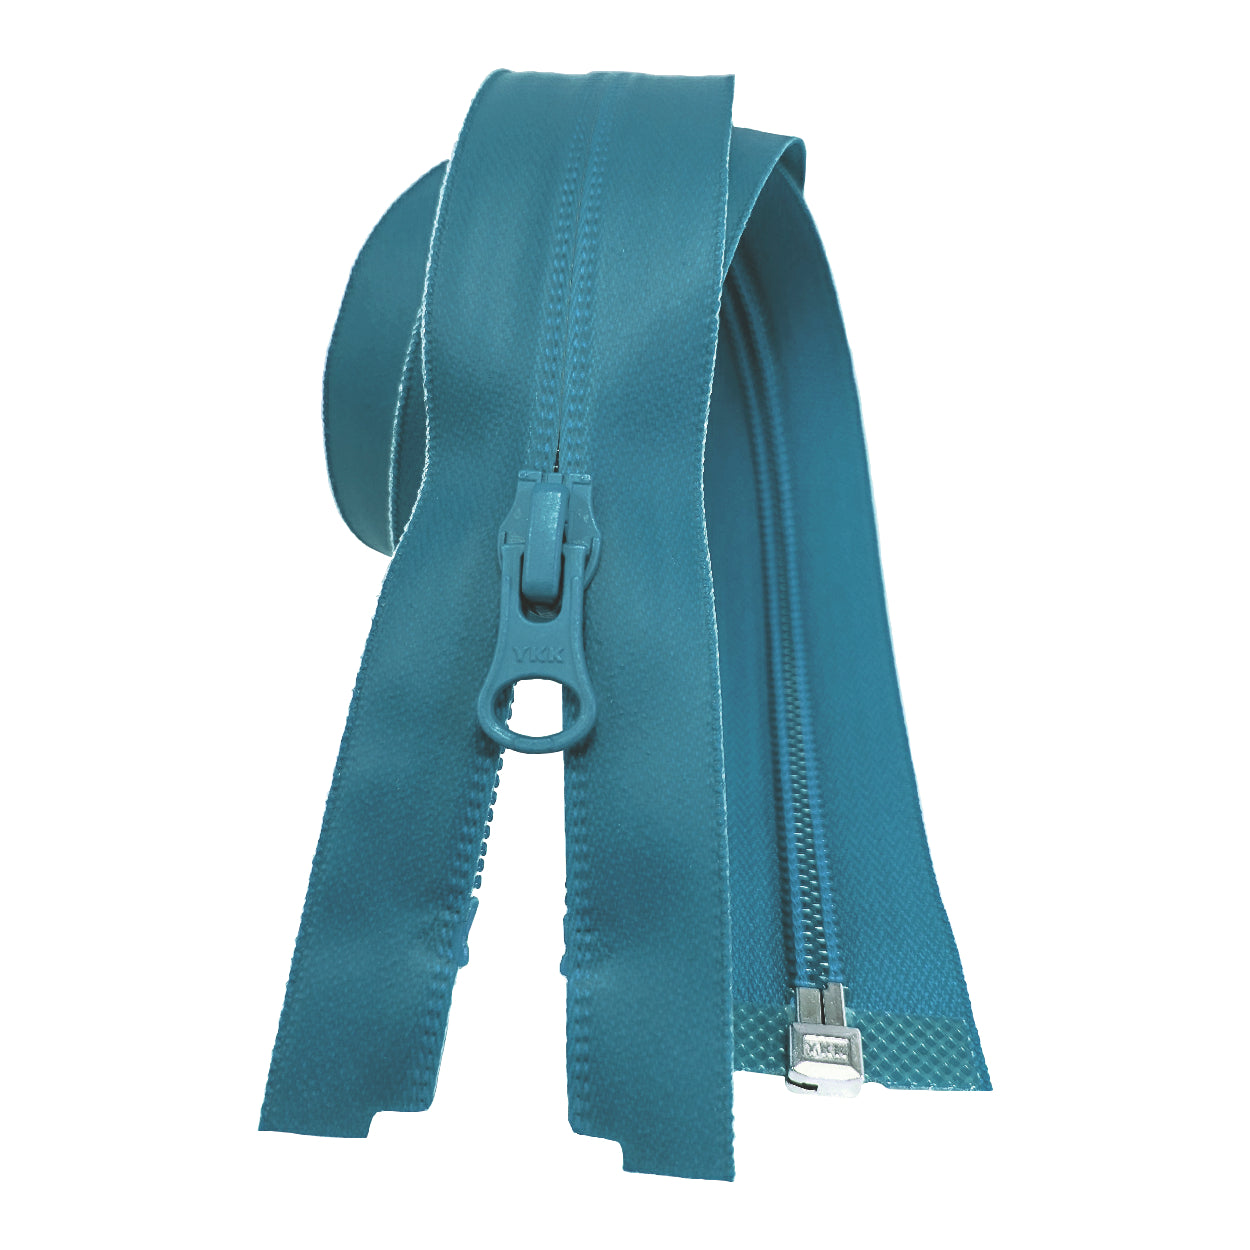 YKK Aquaguard Water repellent zip | Jade from Jaycotts Sewing Supplies